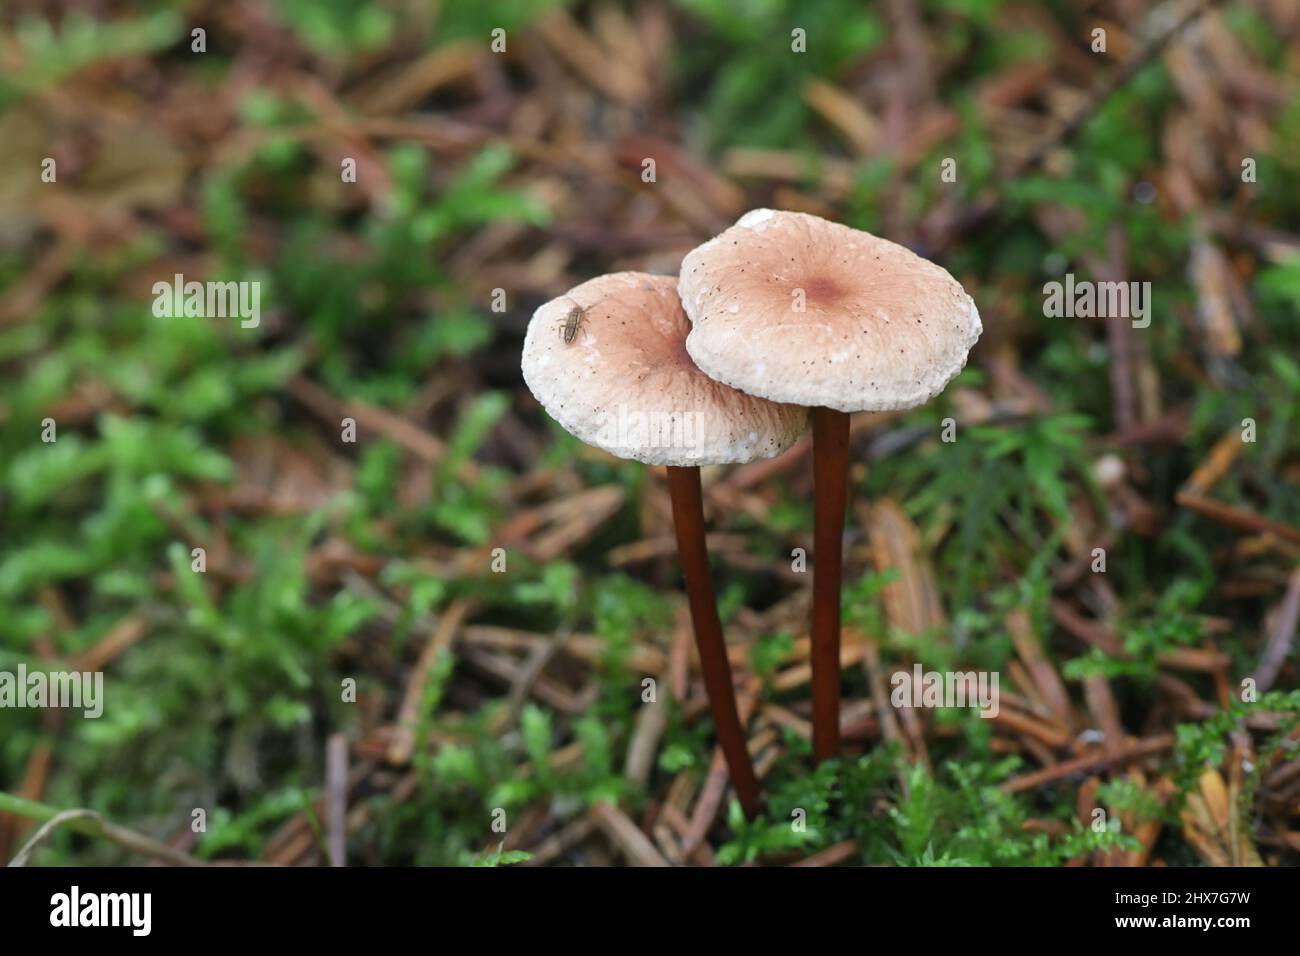 Mycetinis scorodonius, known as vampires bane or garlic scented mushroom, wild edible fungus from Finland Stock Photo